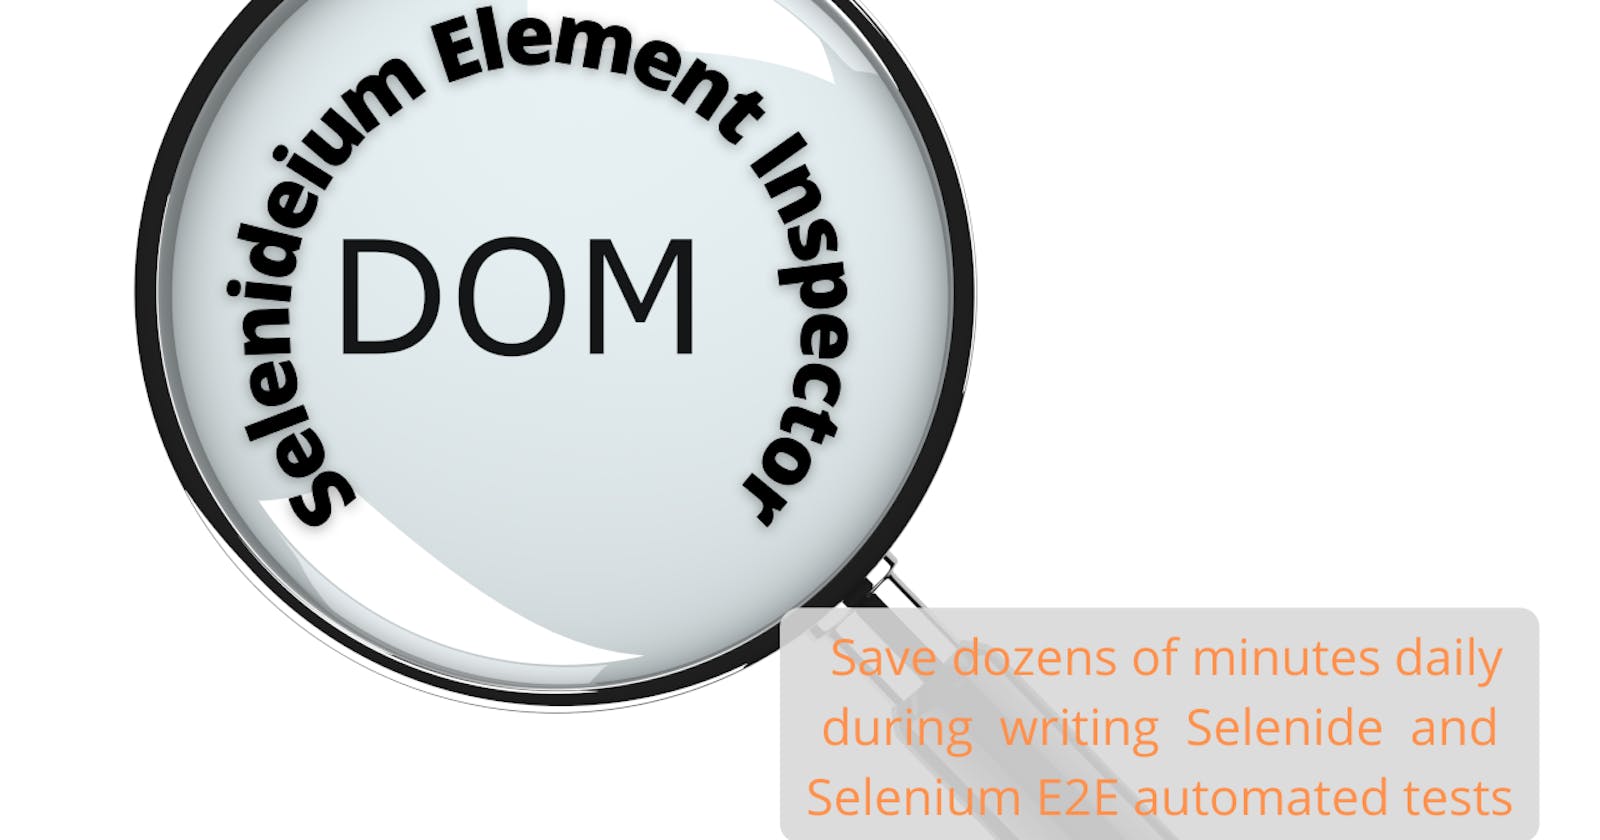 Selenium JavaScript Python C#, Cypress, TestCafe, Playwright, Squish selector generation has been added to Selenideium Element Inspector v2.0